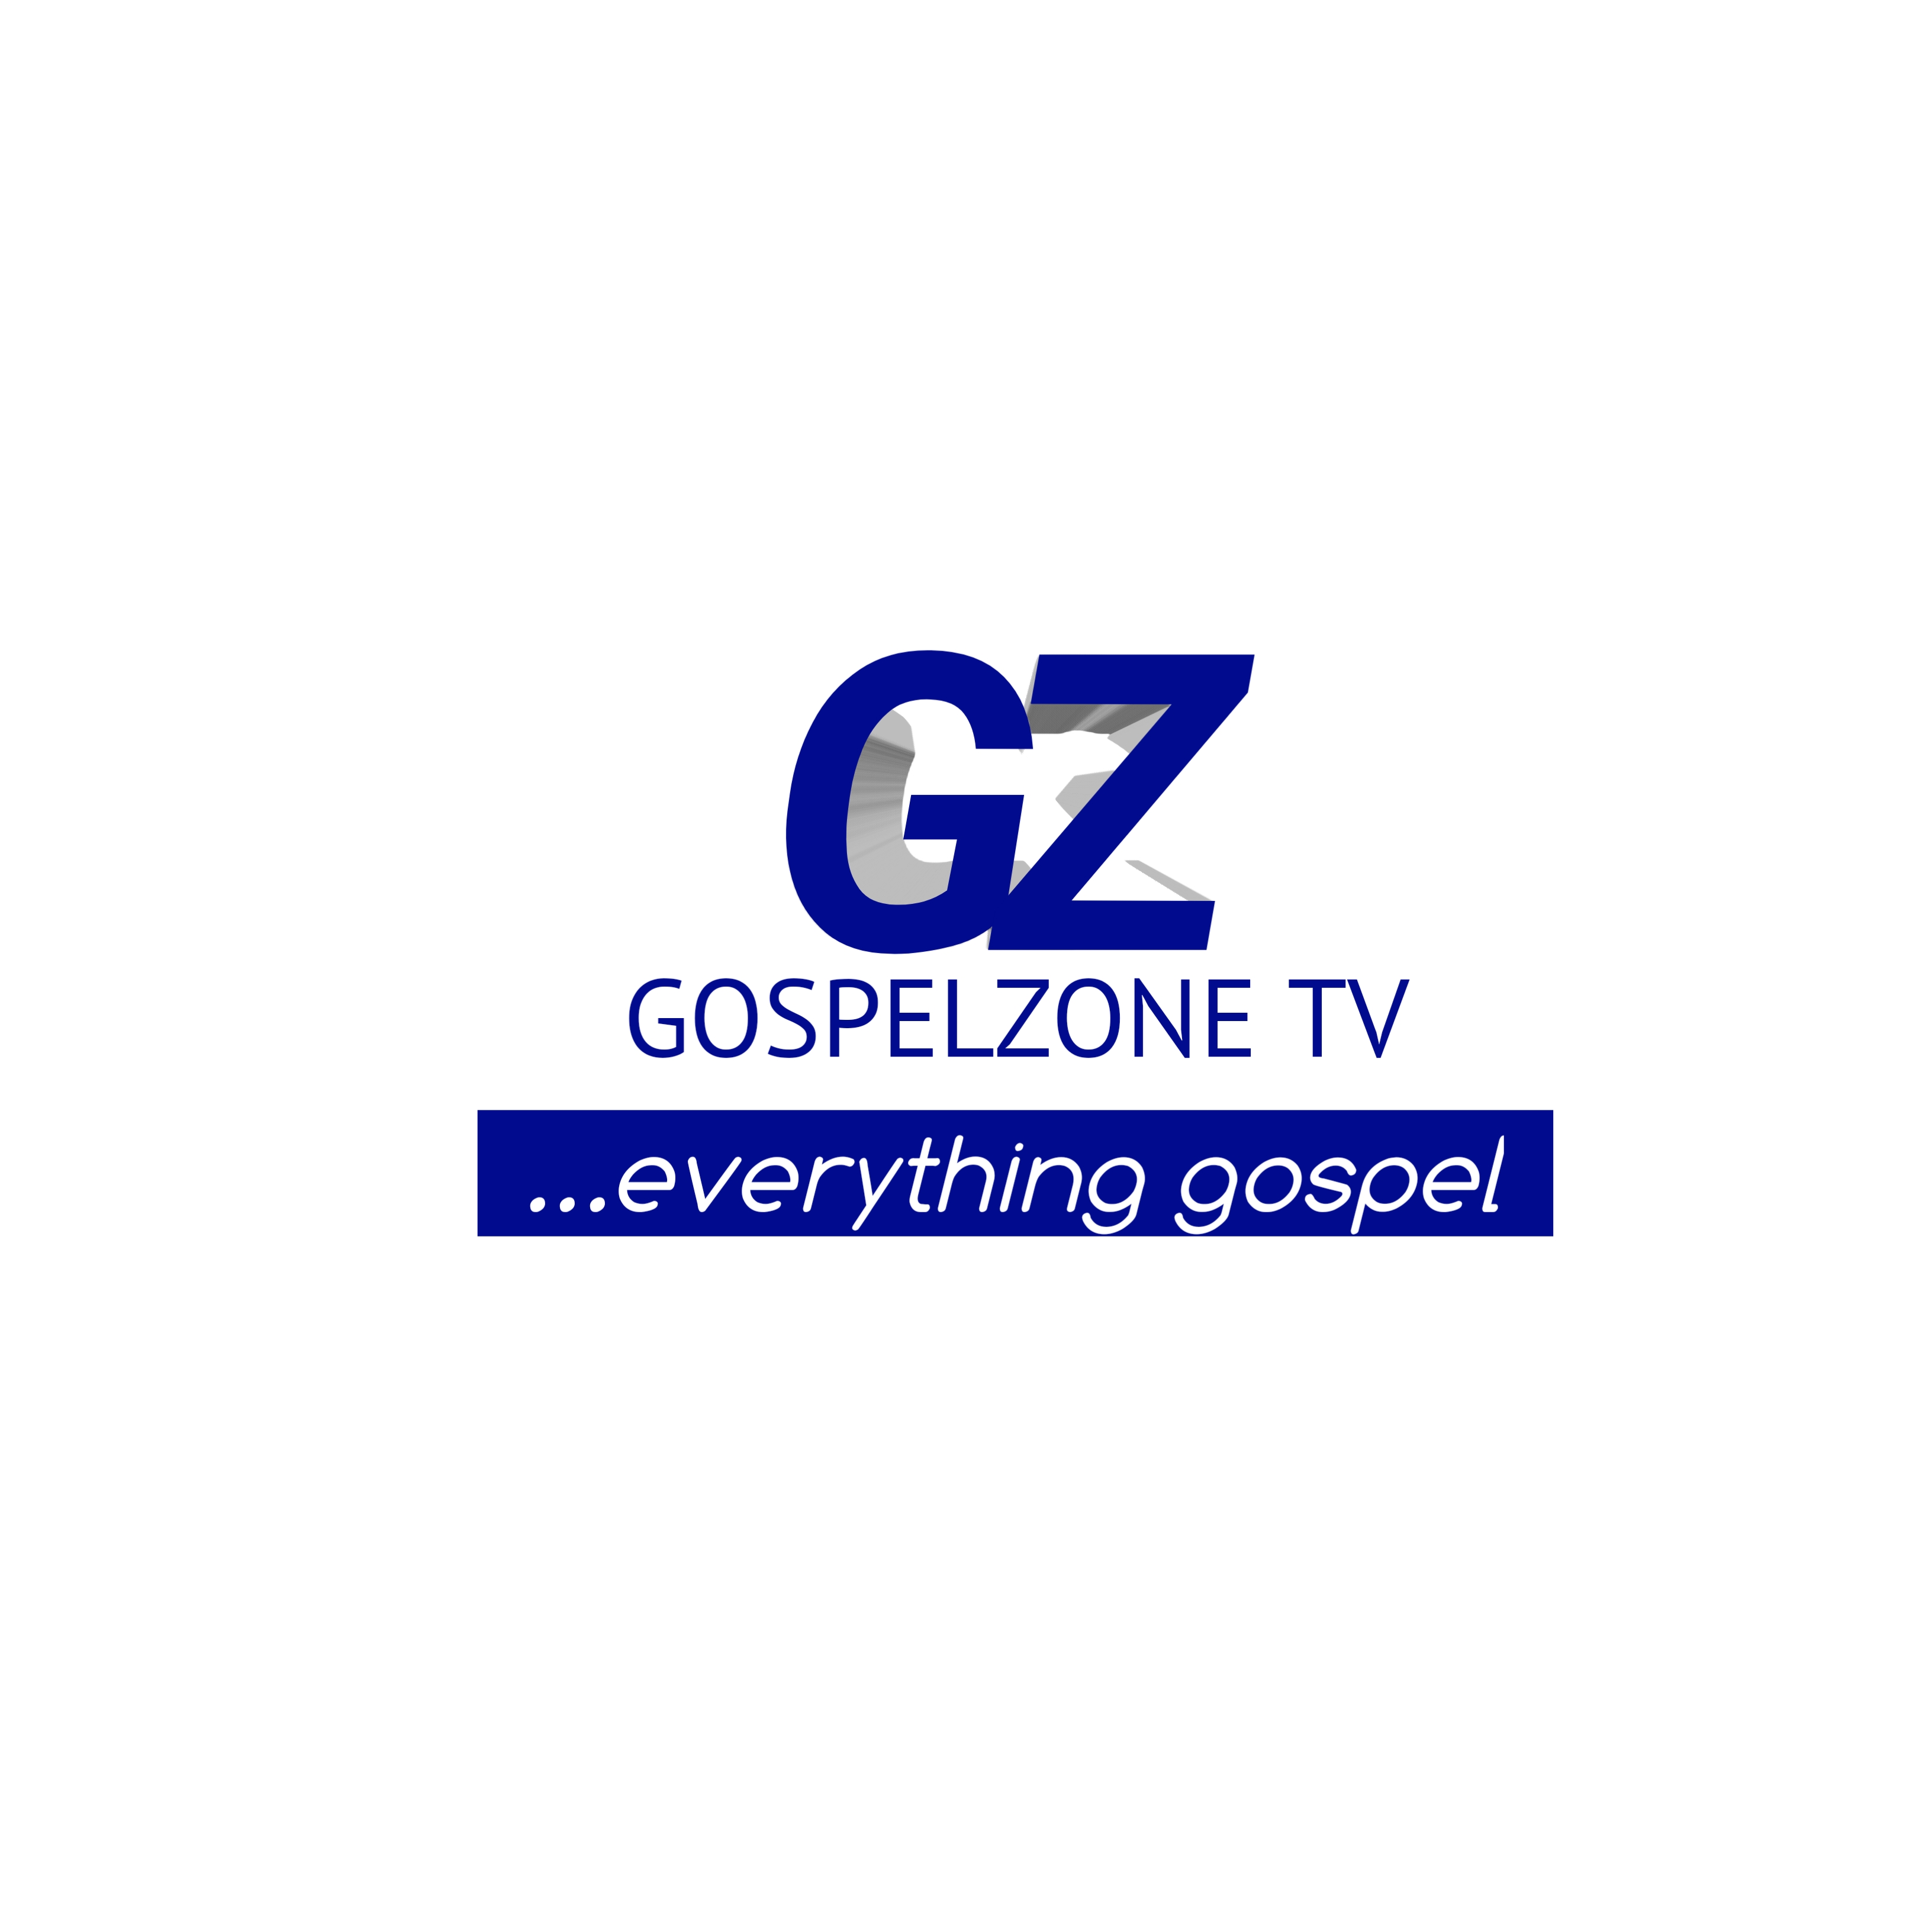 GospelZenith TV